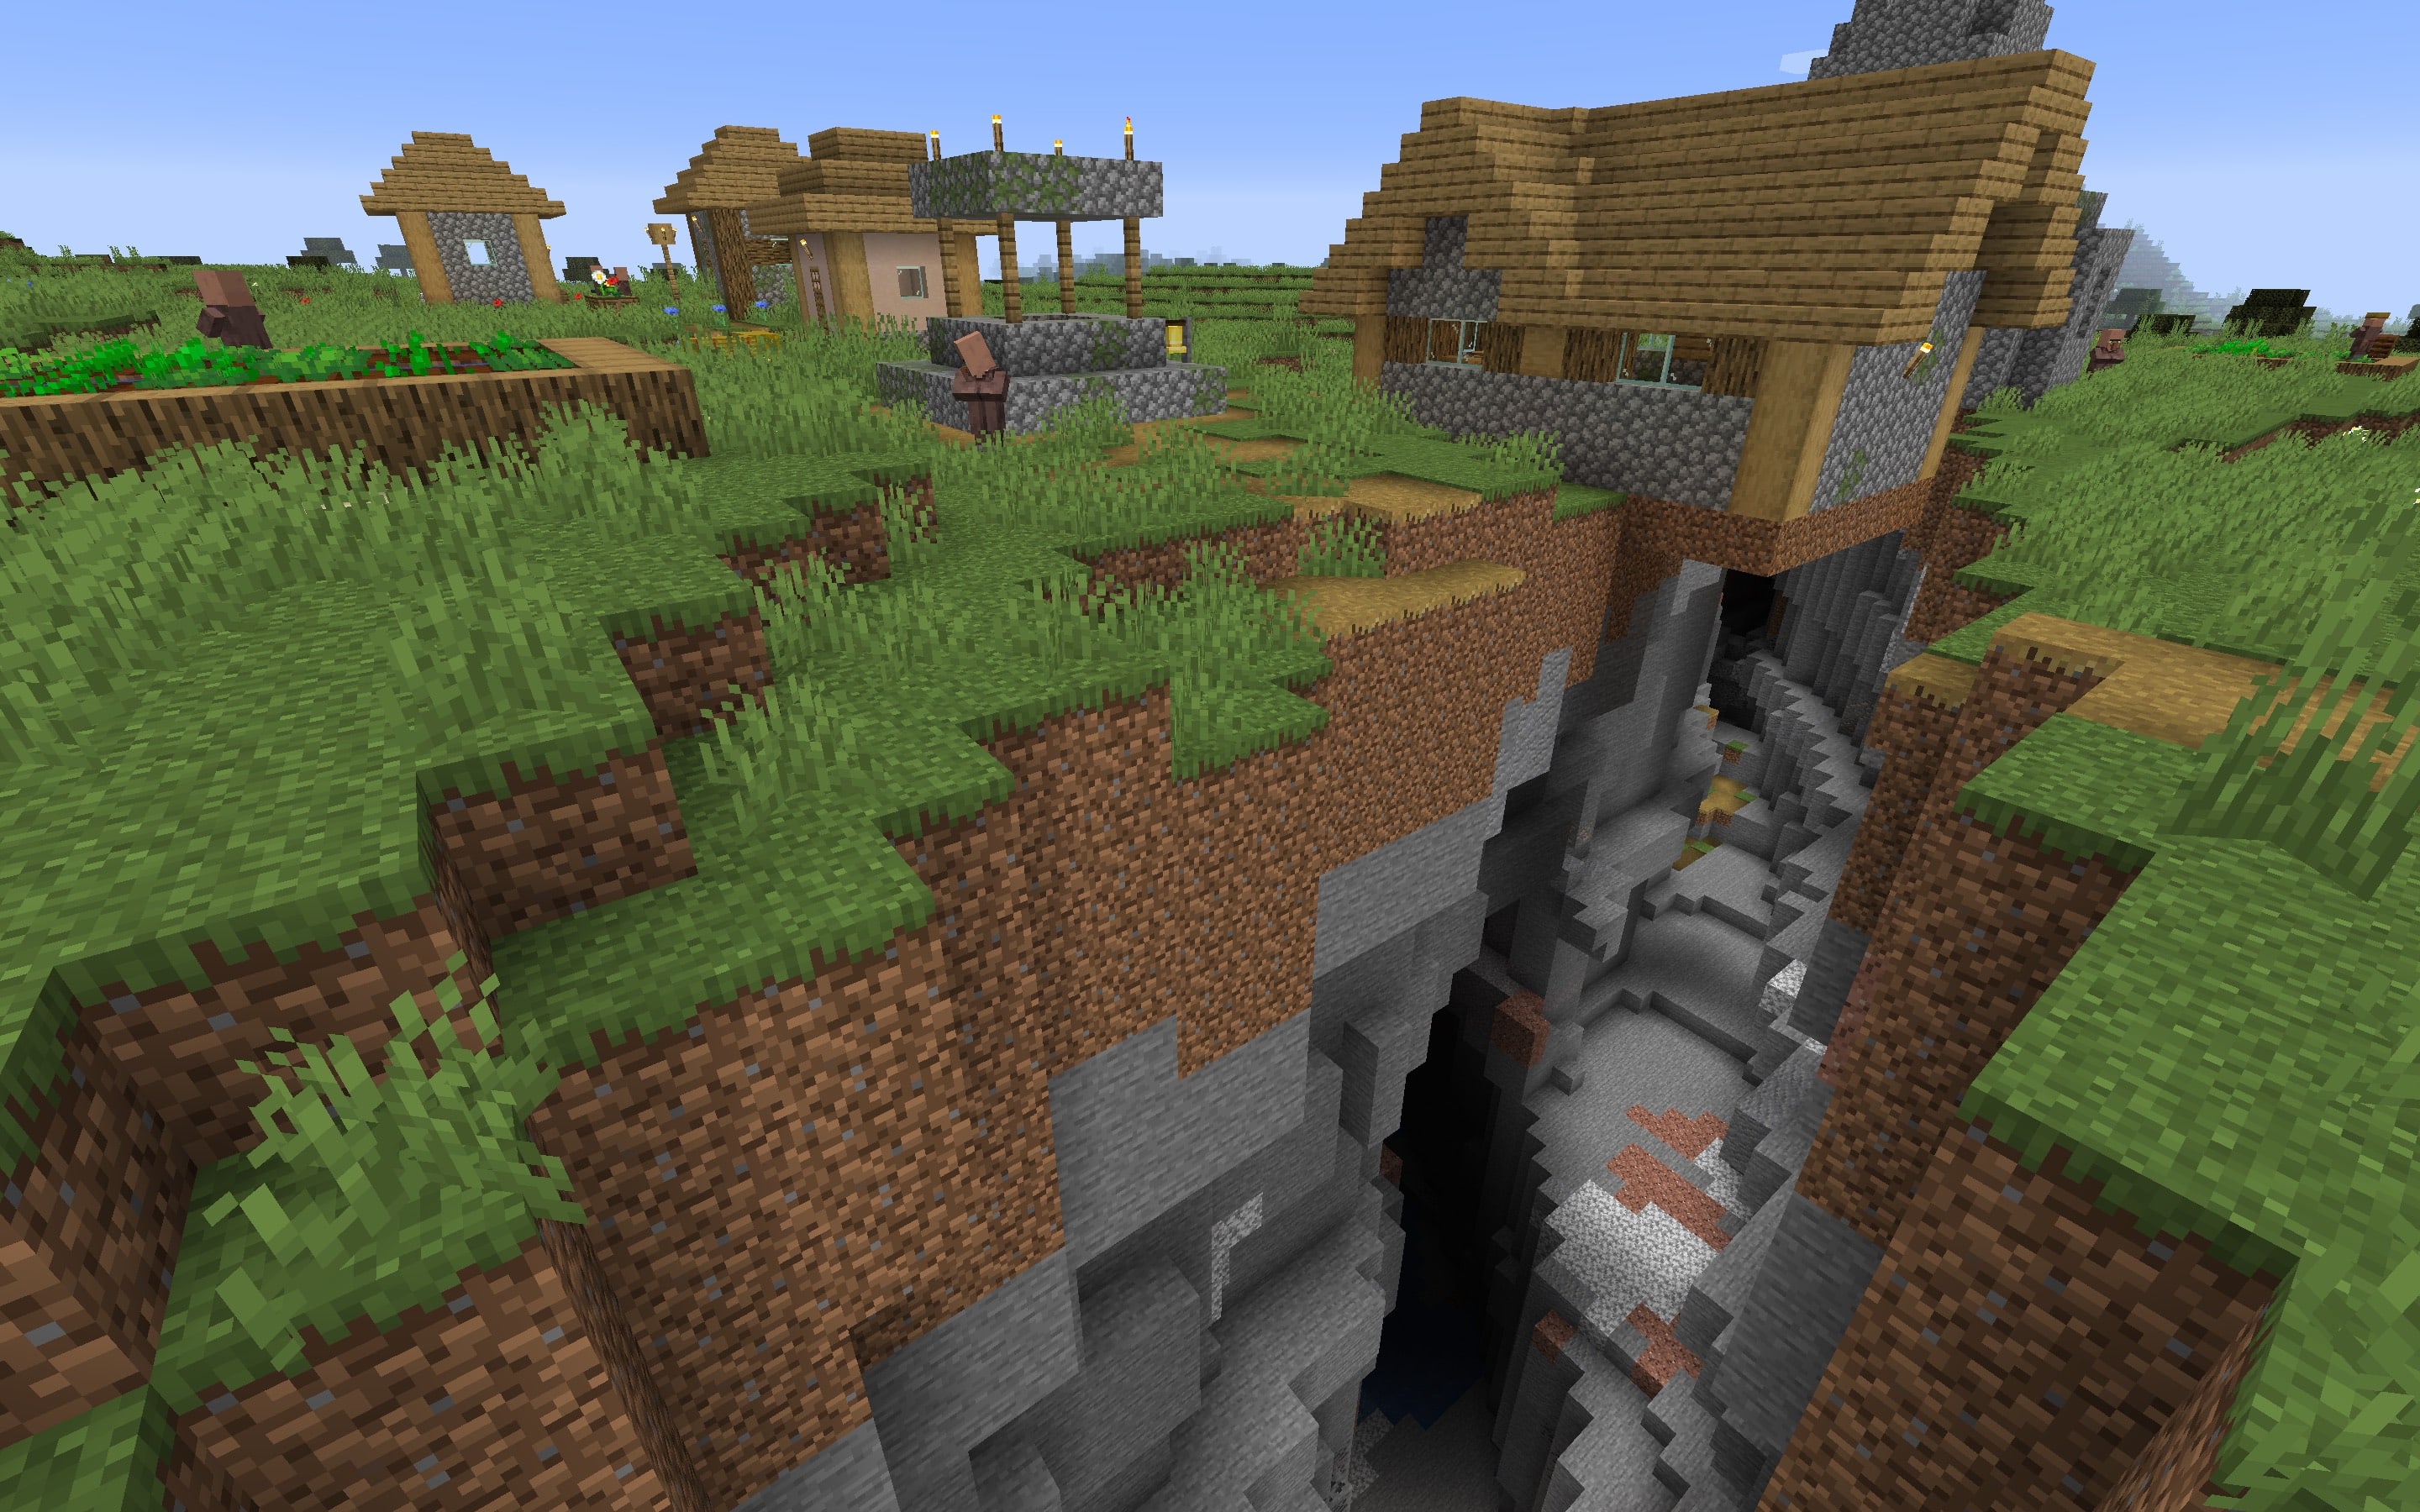 Minecraft 1.14 Seed - Ravine and Village